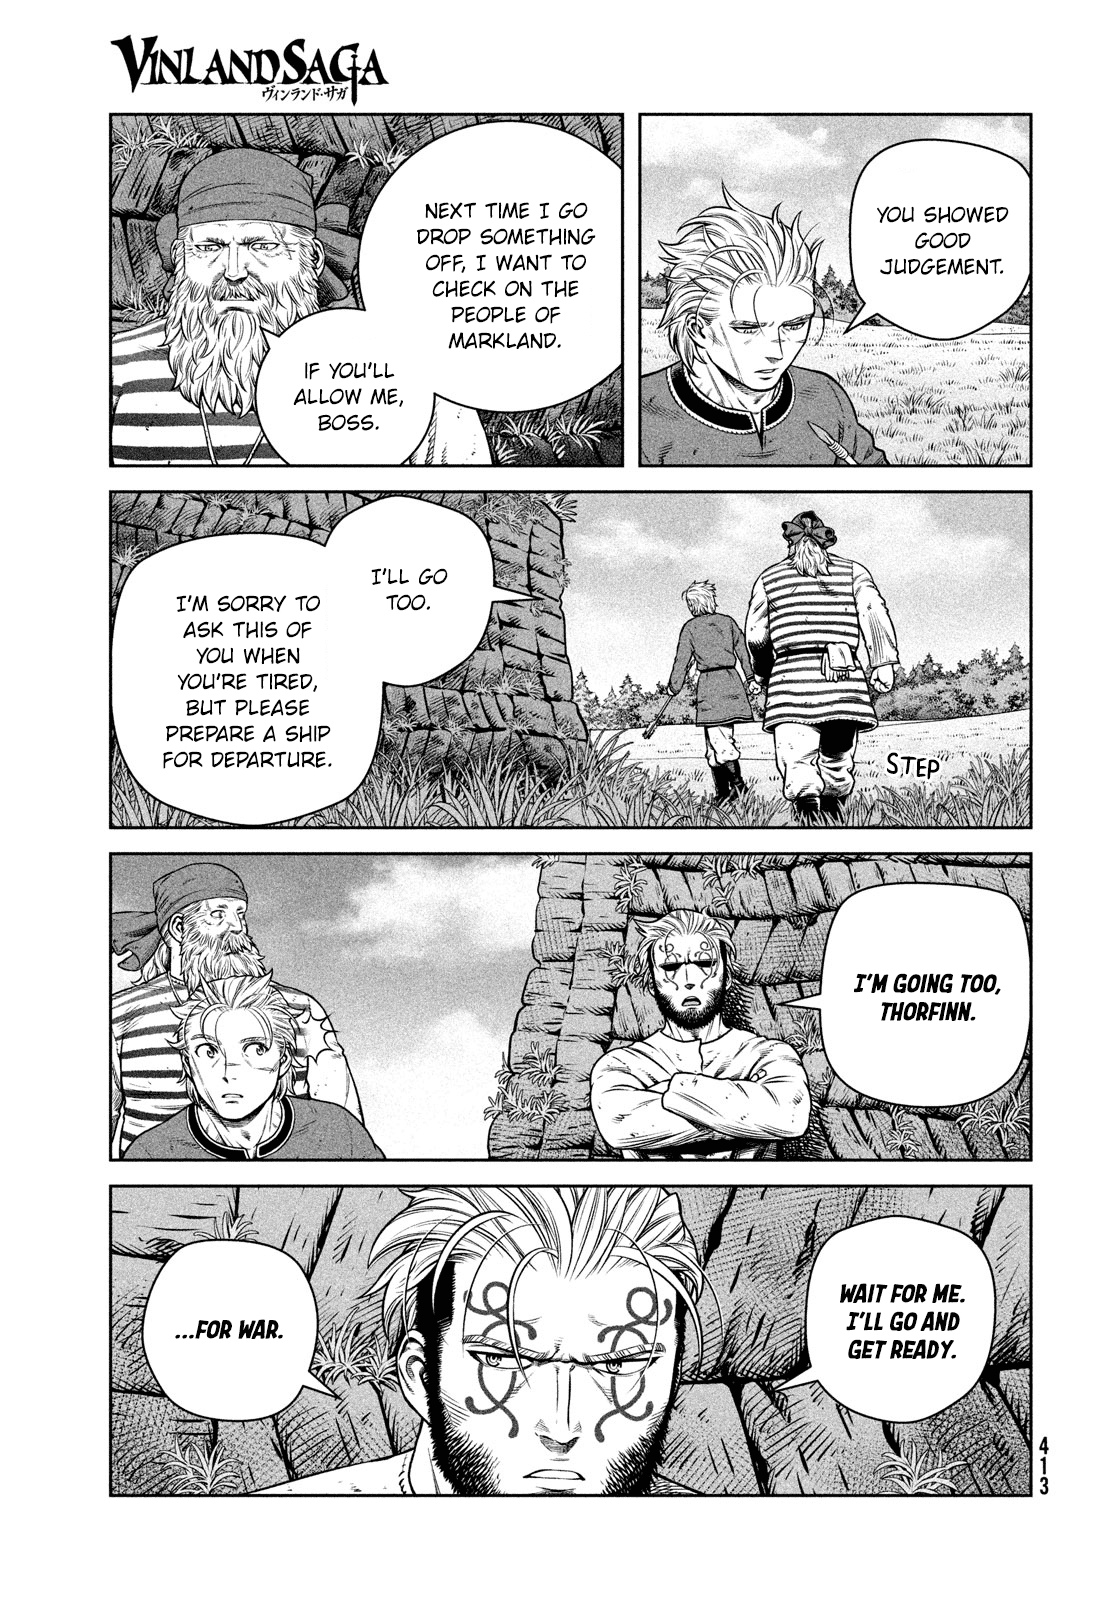 Vinland Saga Manga Manga Chapter - 192 - image 10